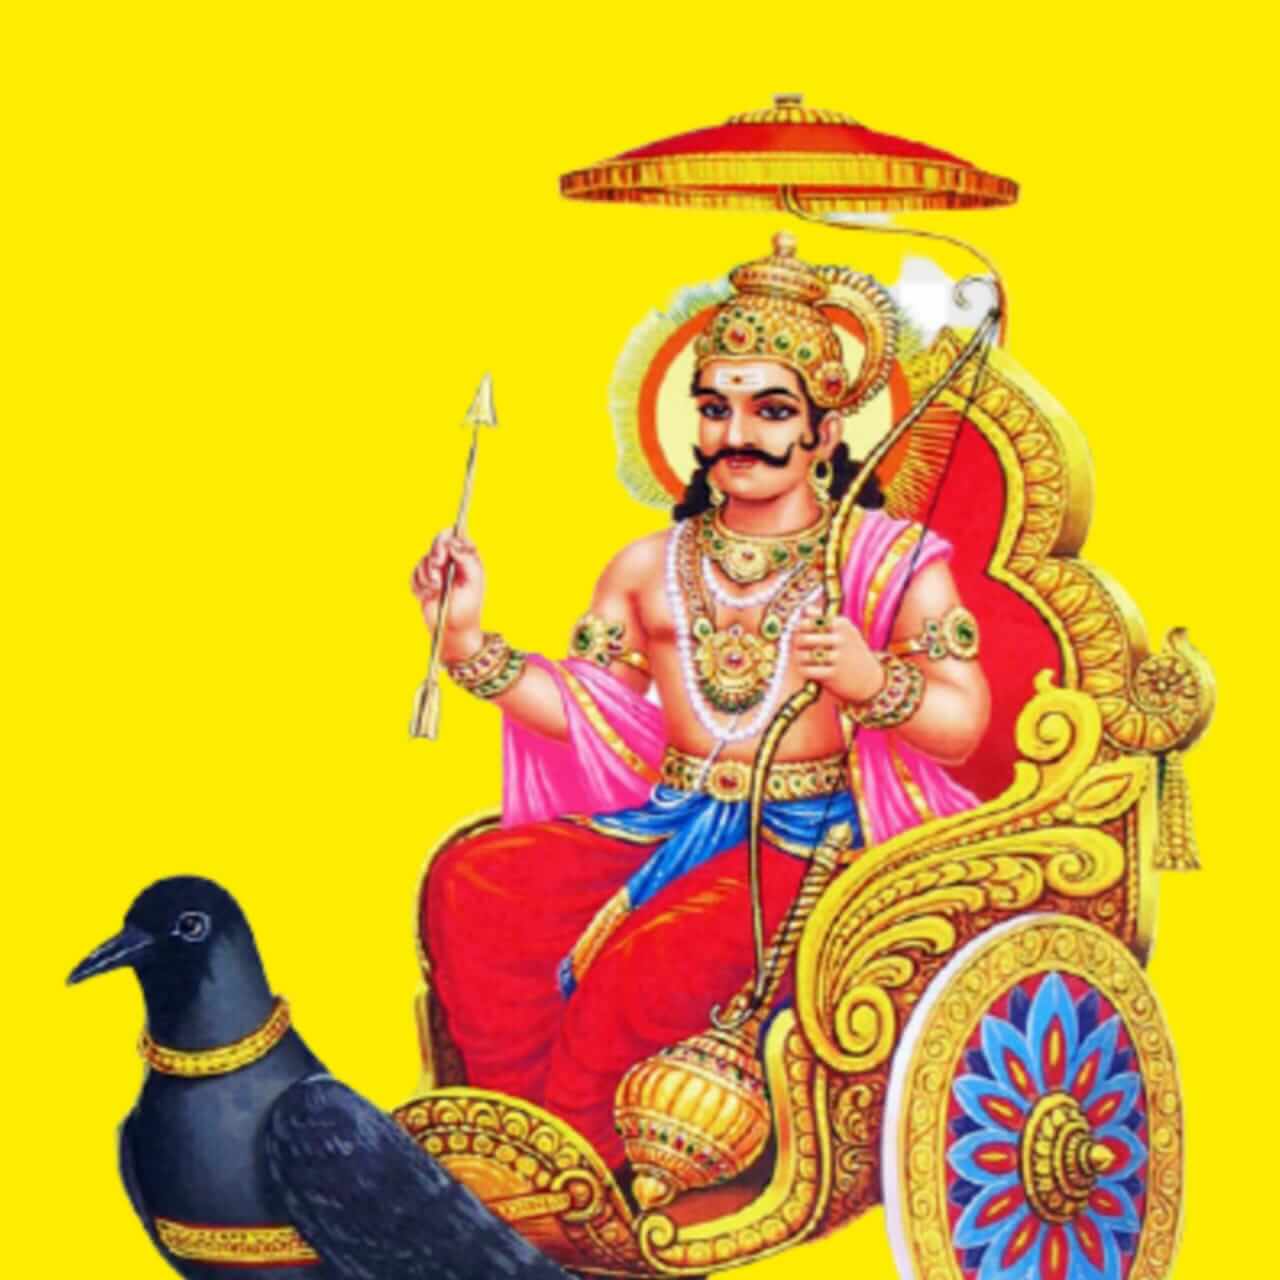 750 Shani Dev Images And Jai Shani Dev Images Hd Download Best Wishes Image